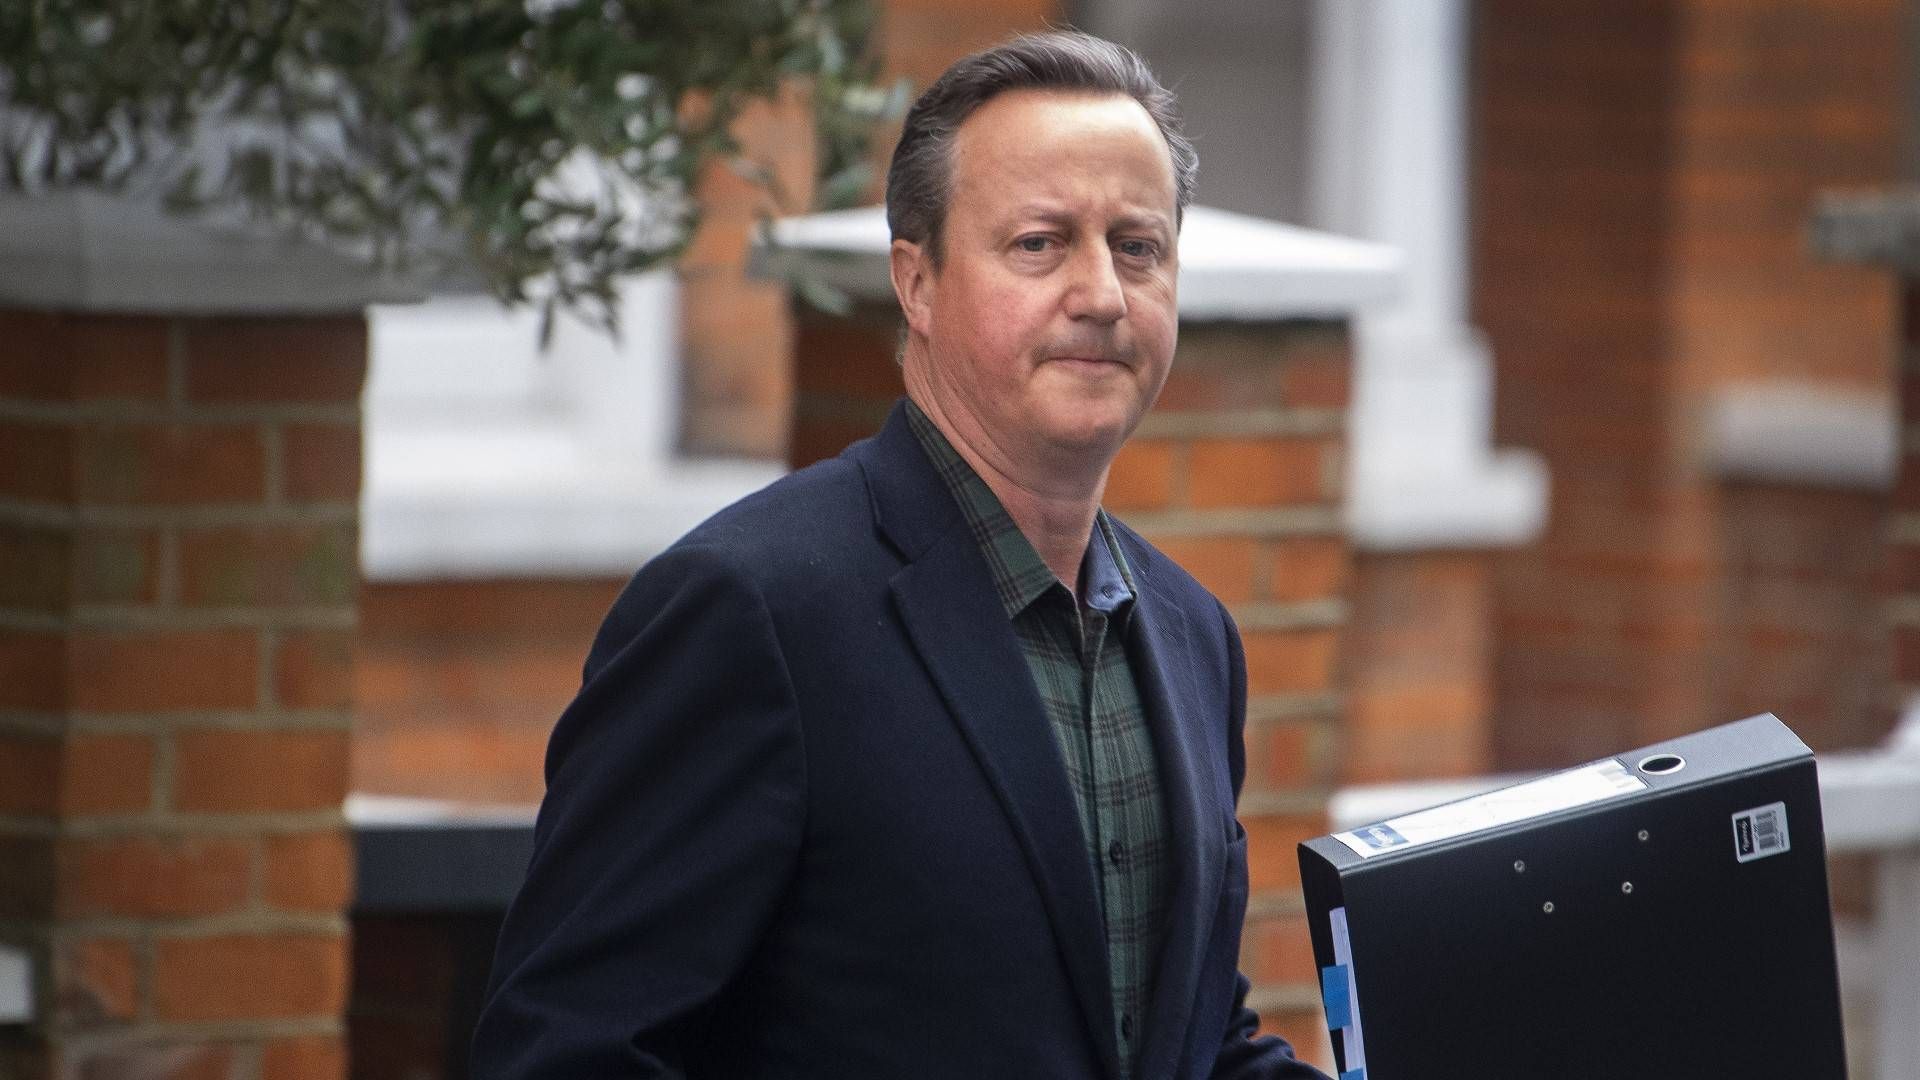 David Cameron, ehemaliger britischer Premierminister | Foto: picture alliance / empics | Victoria Jones